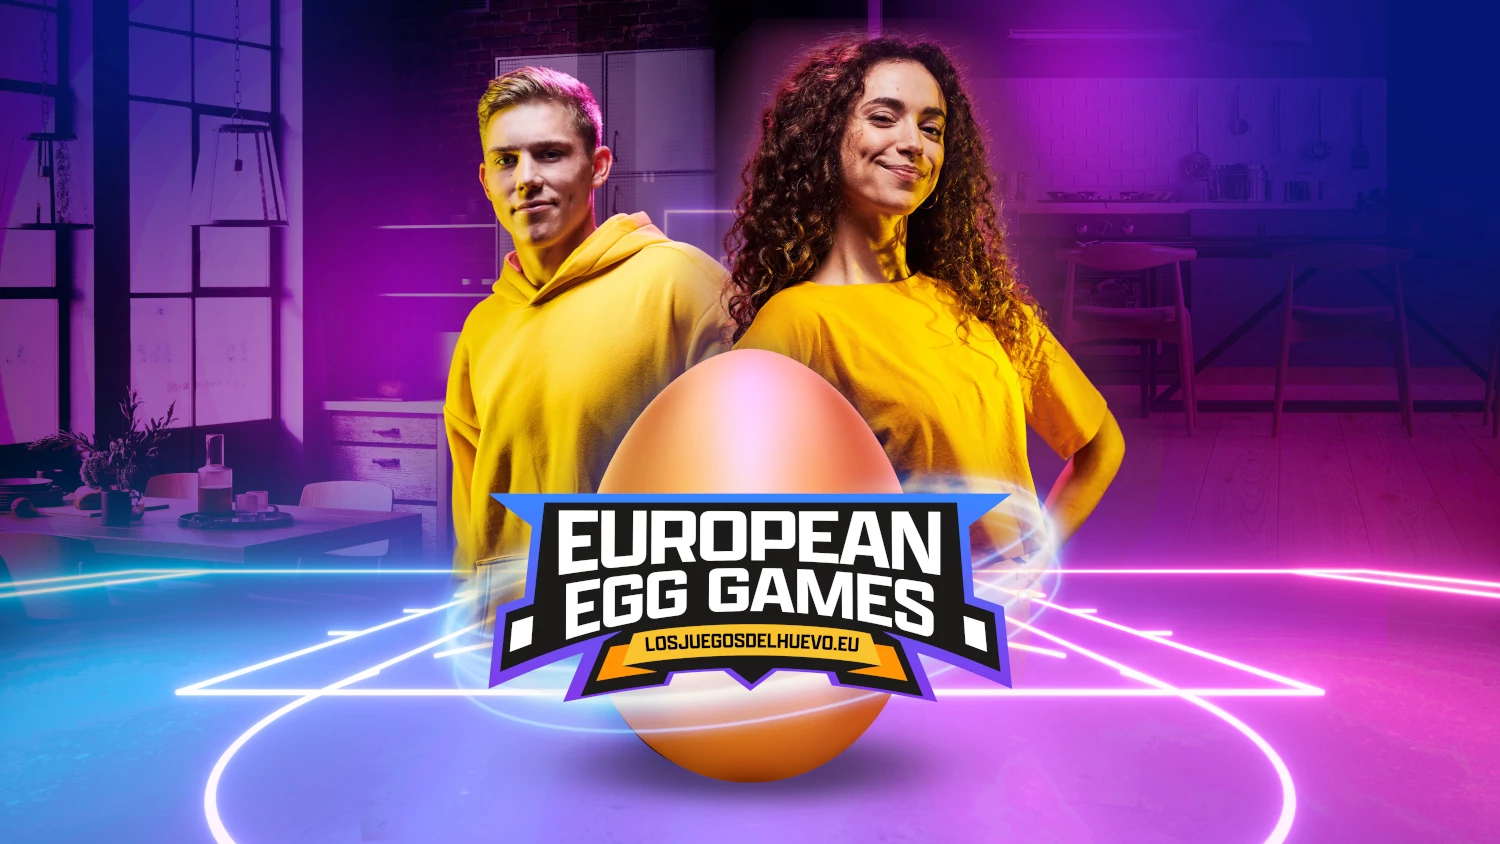 European egg games